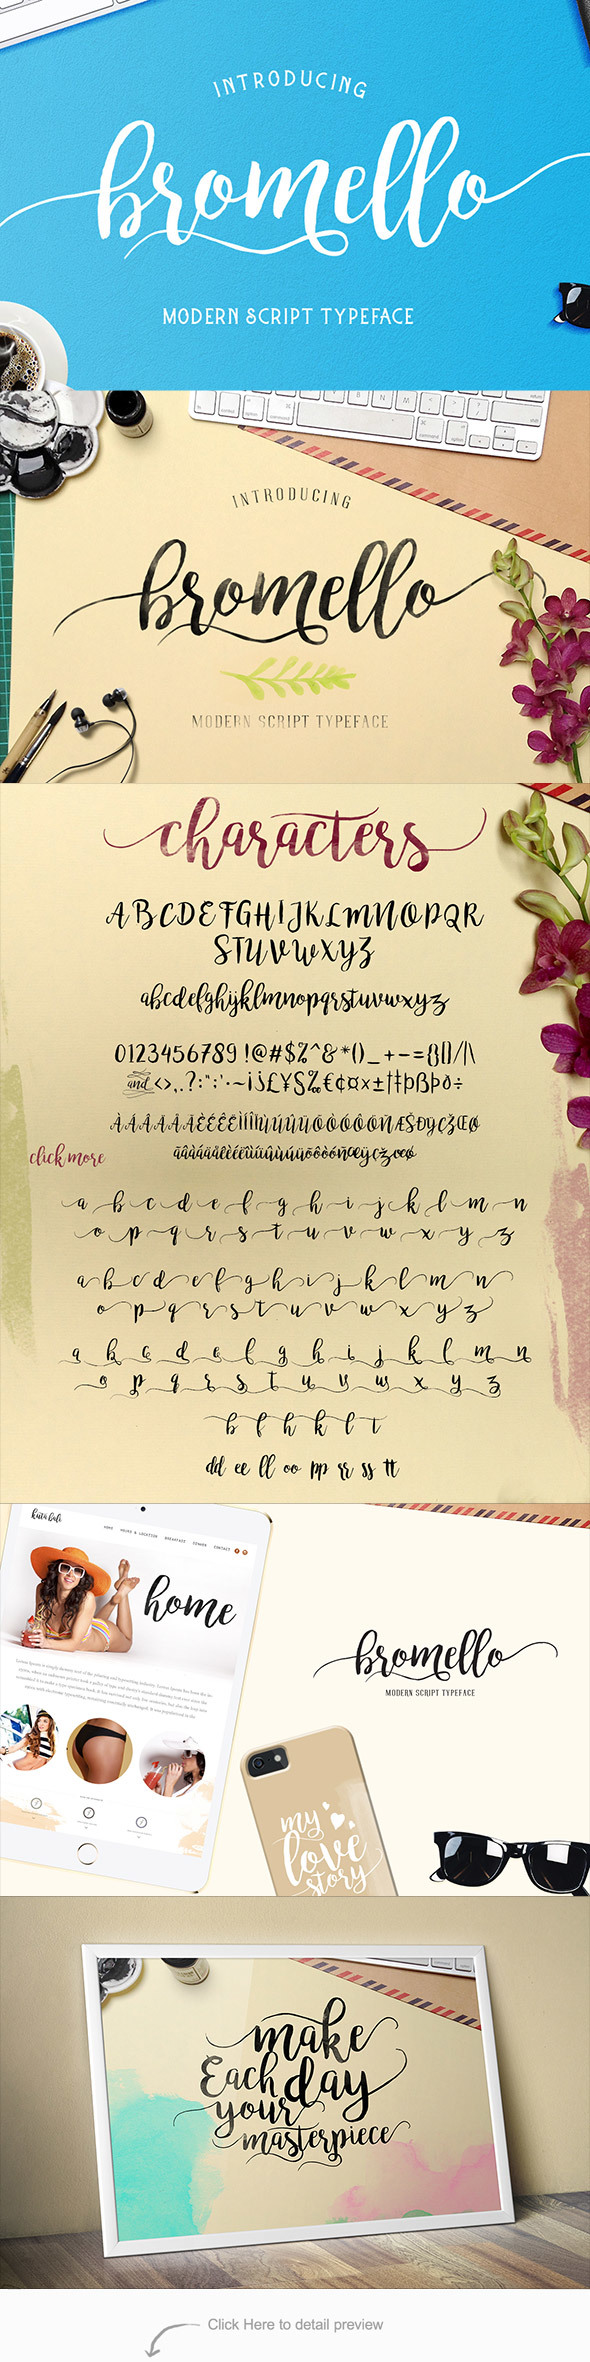 bromello typeface